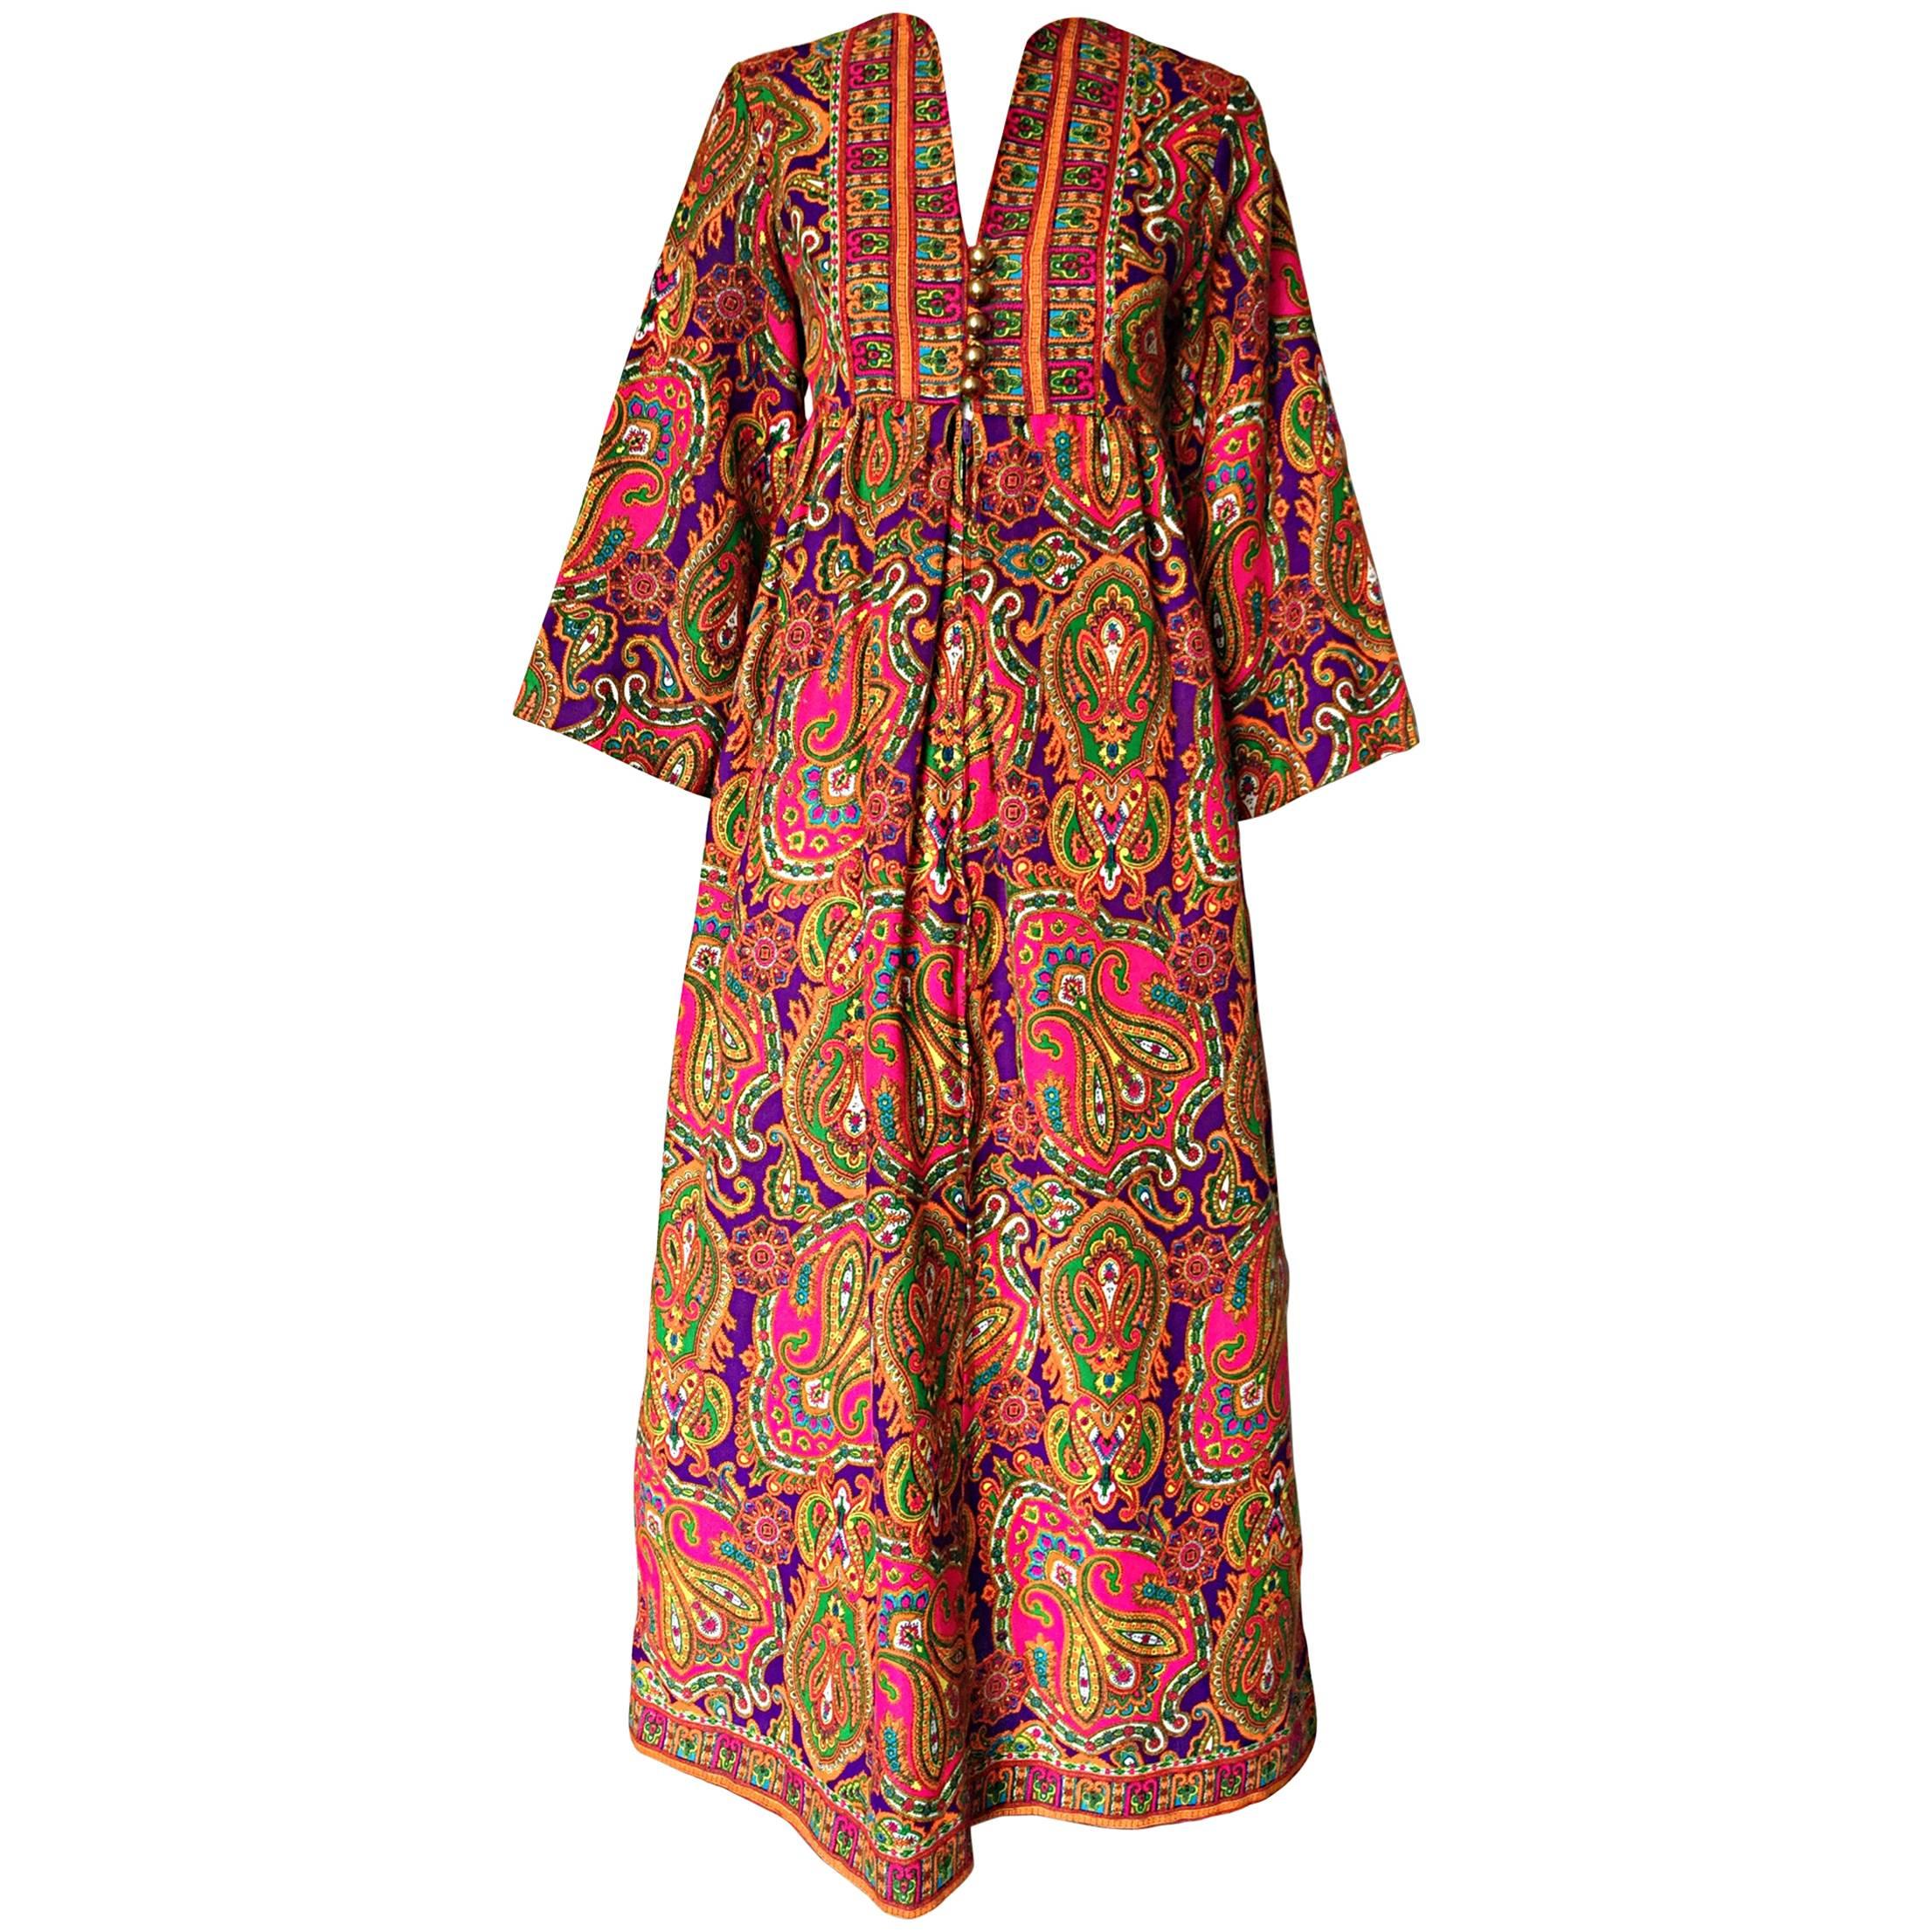 Vintage Joseph Magnin 1970s Psychedelic Paisley 70s Colorful Caftan Maxi Dress